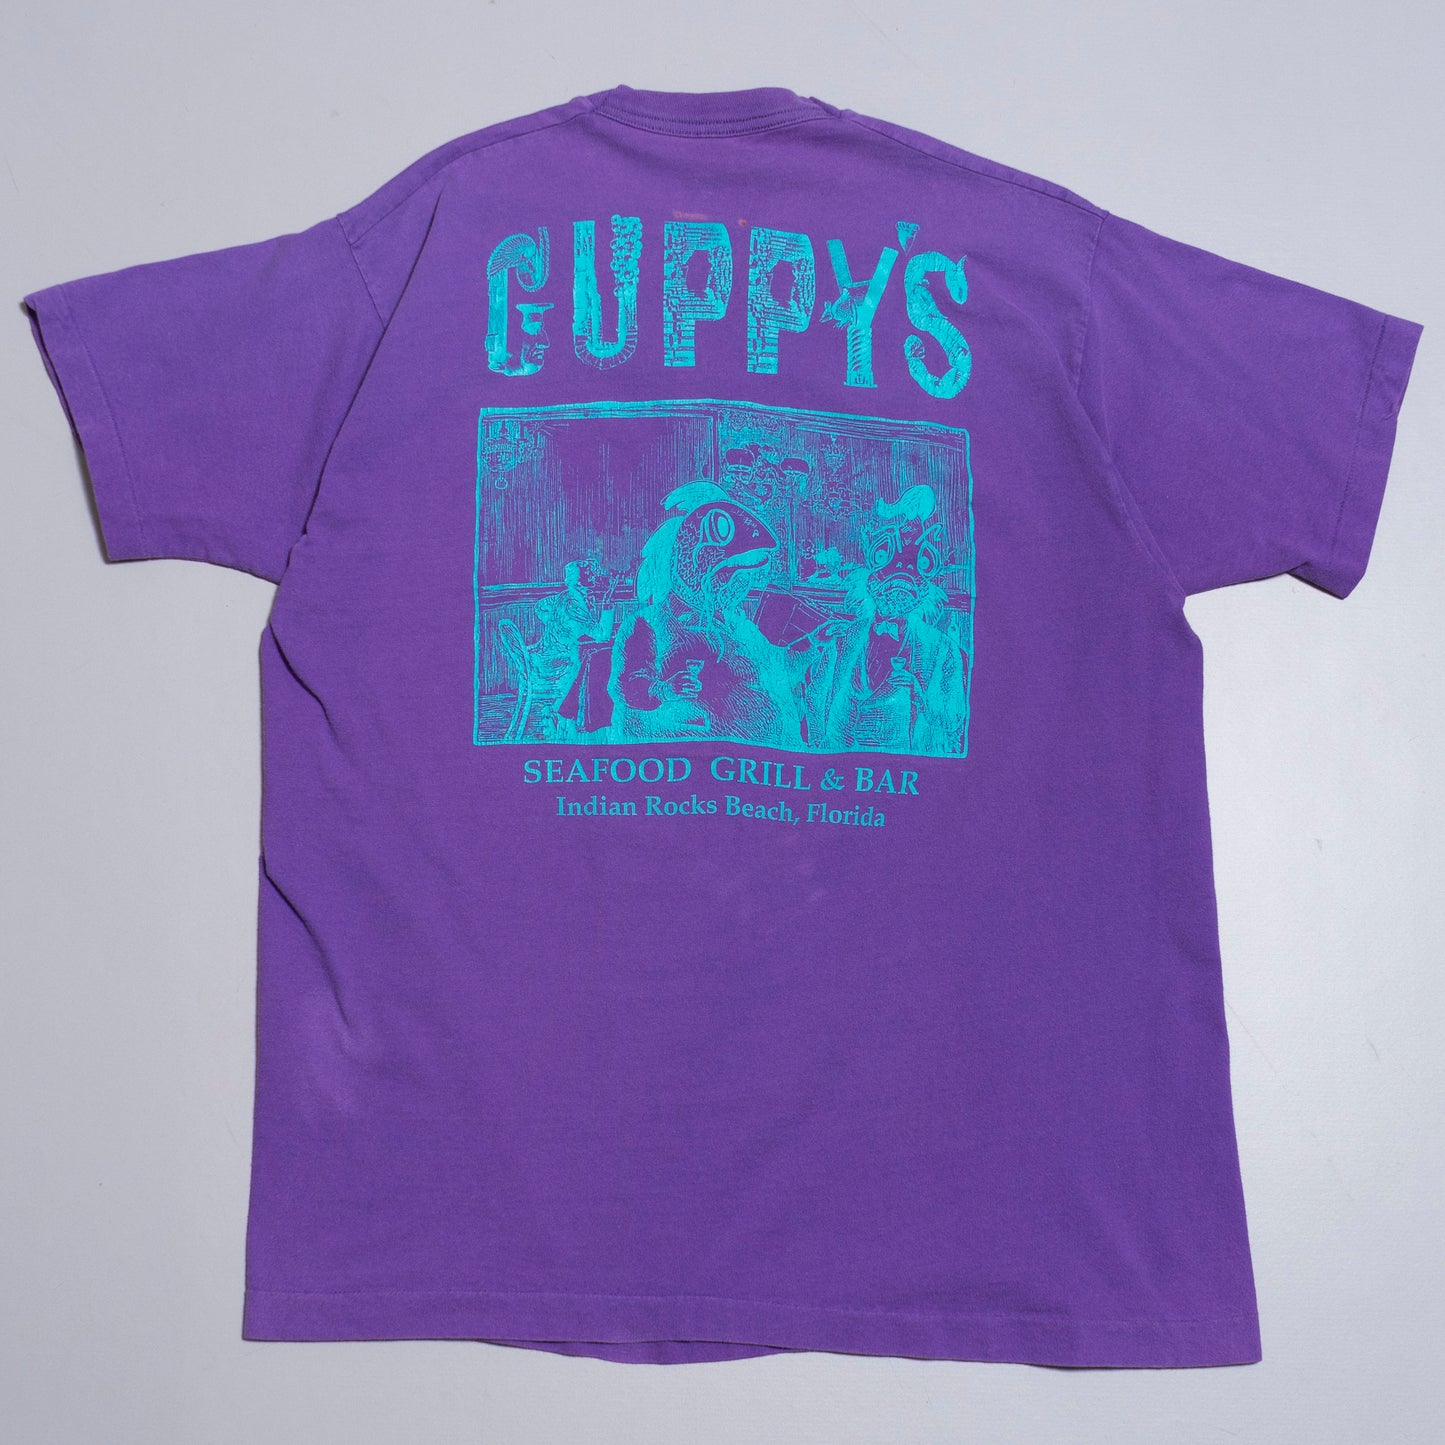 Guppy's on the Beach T Shirt, XL